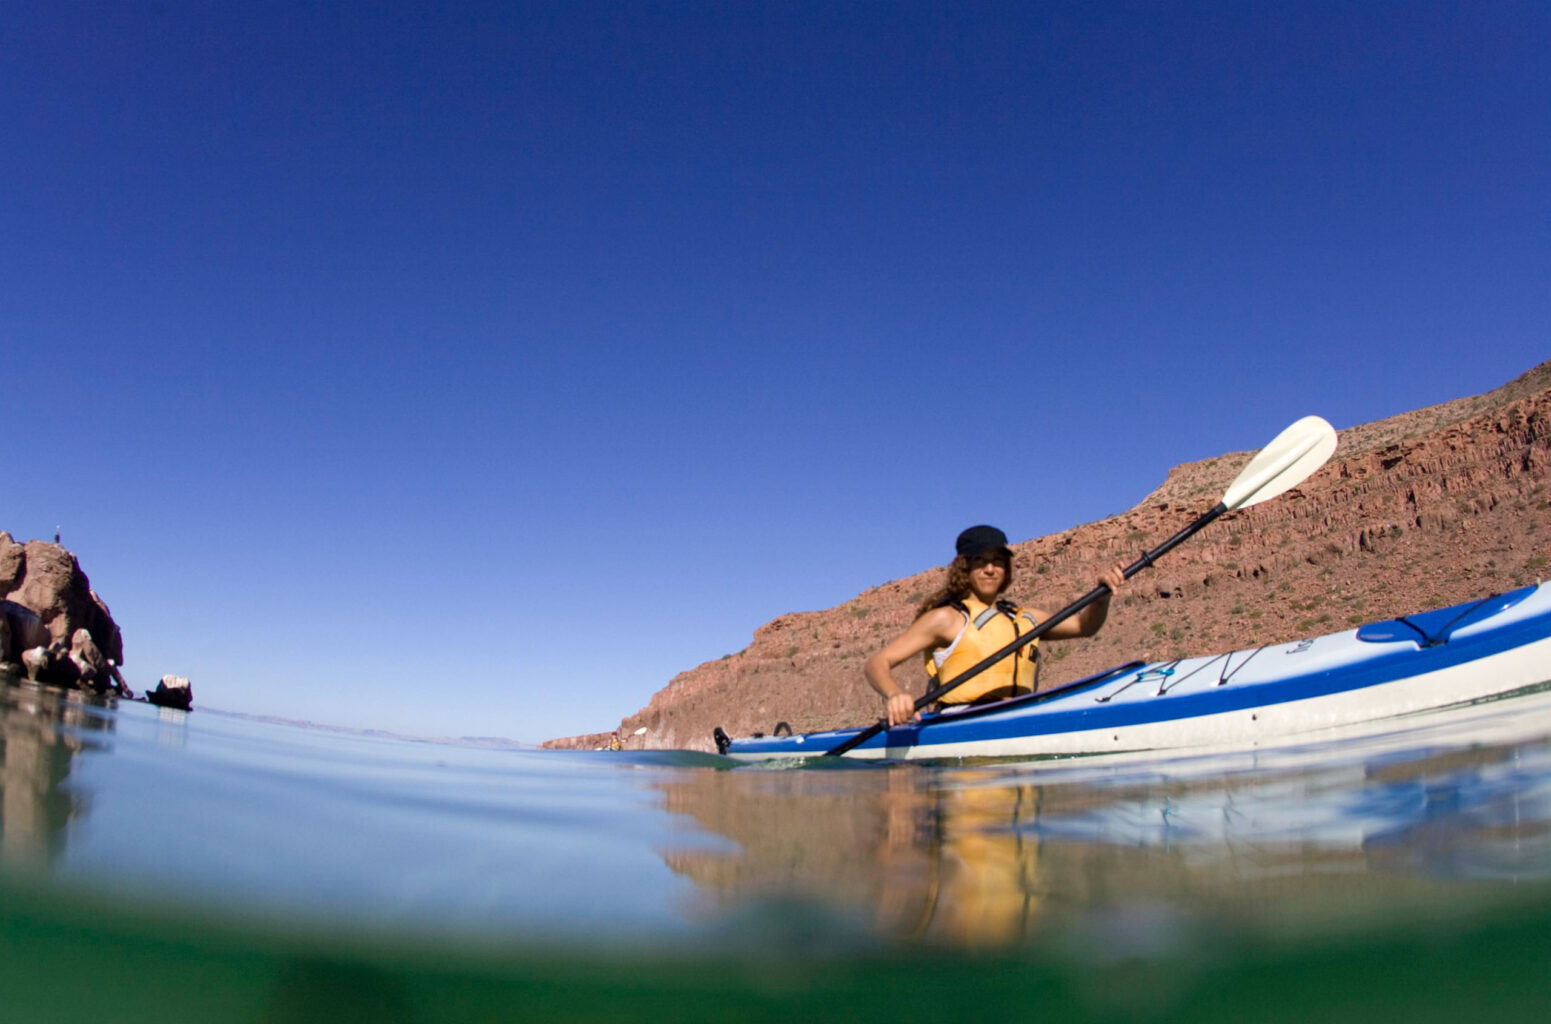 A woman flatwater kayaking.